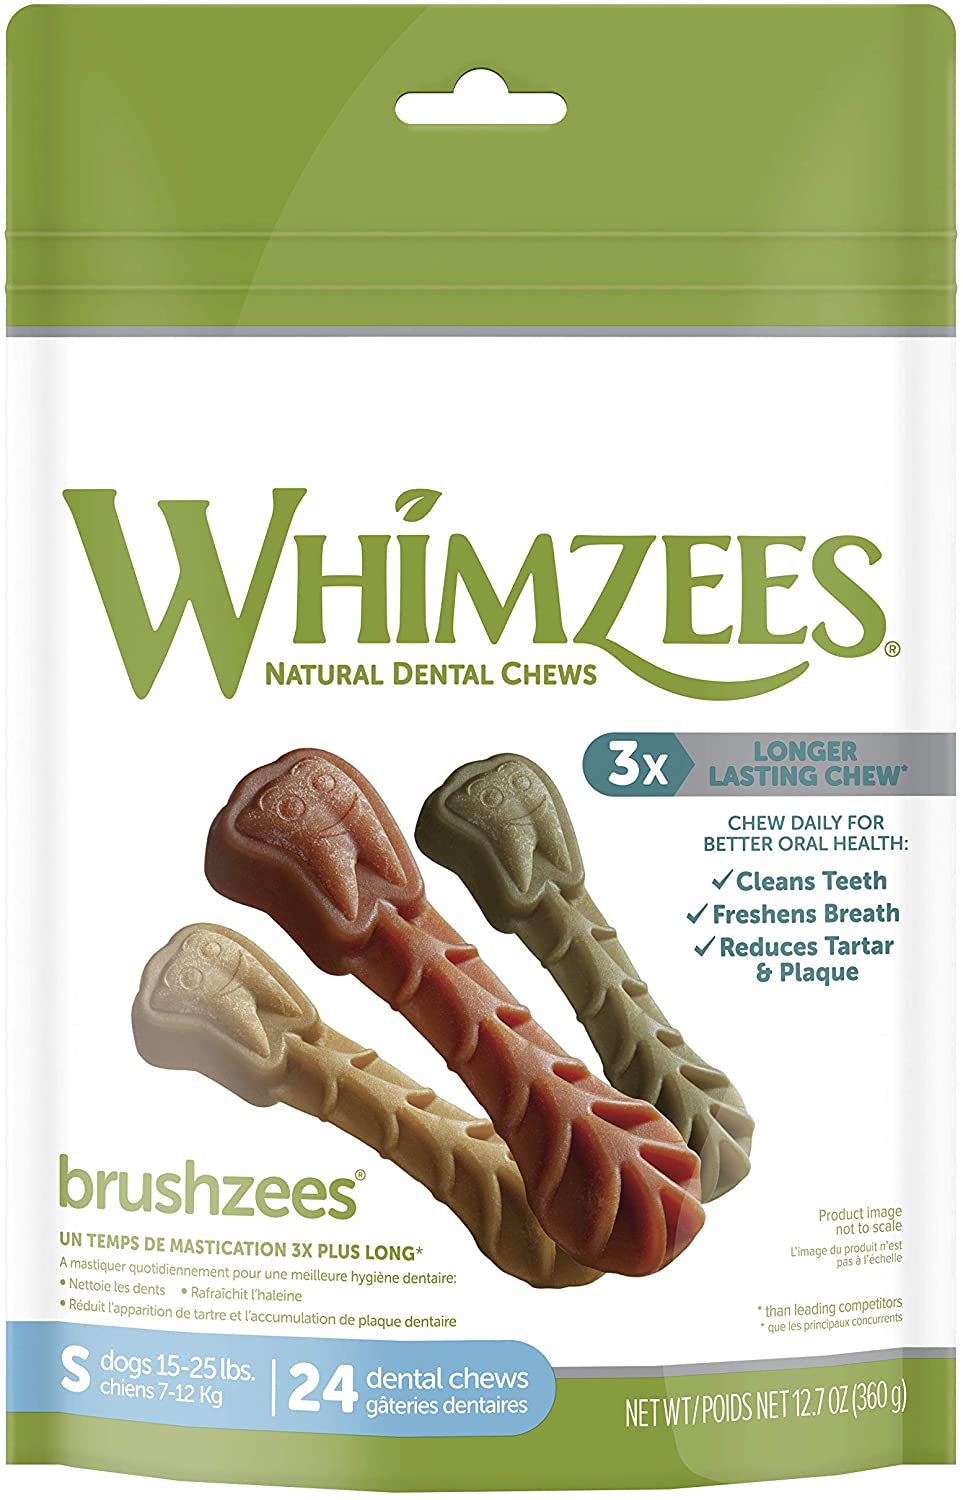 Whimzees Toothbrush Dental Treats